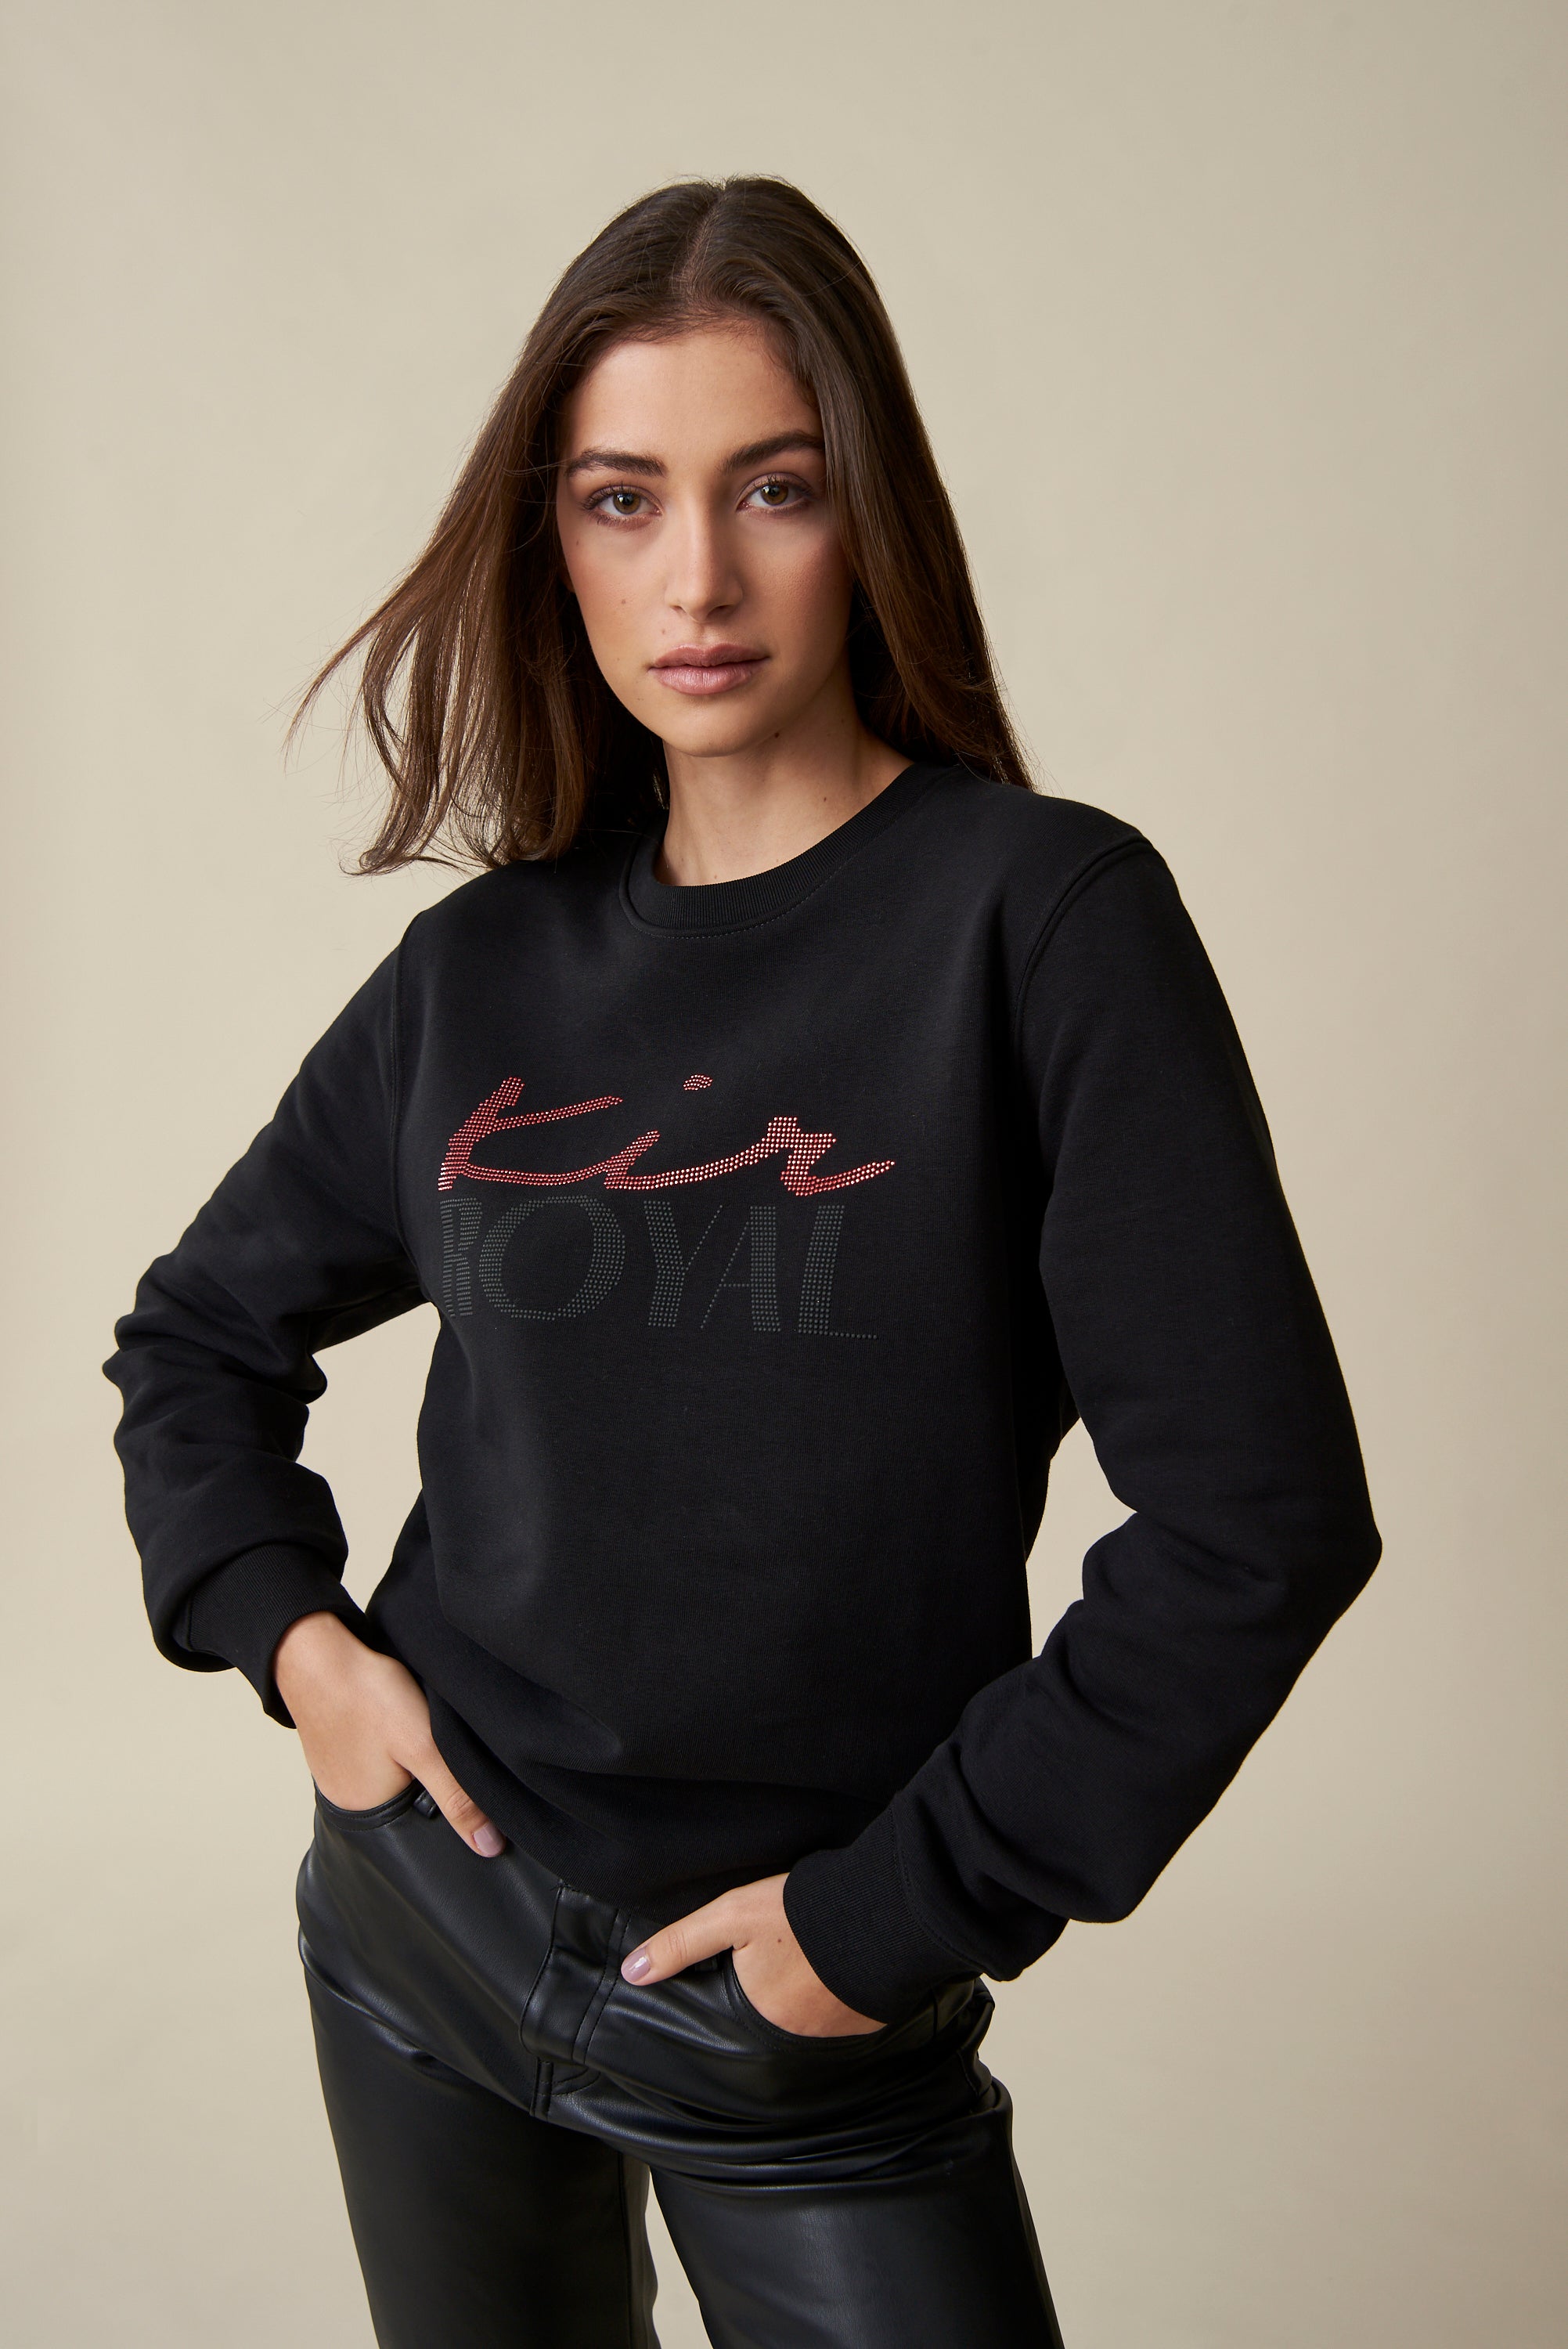 Kir Royal Sweater - Black/Rhinestone 